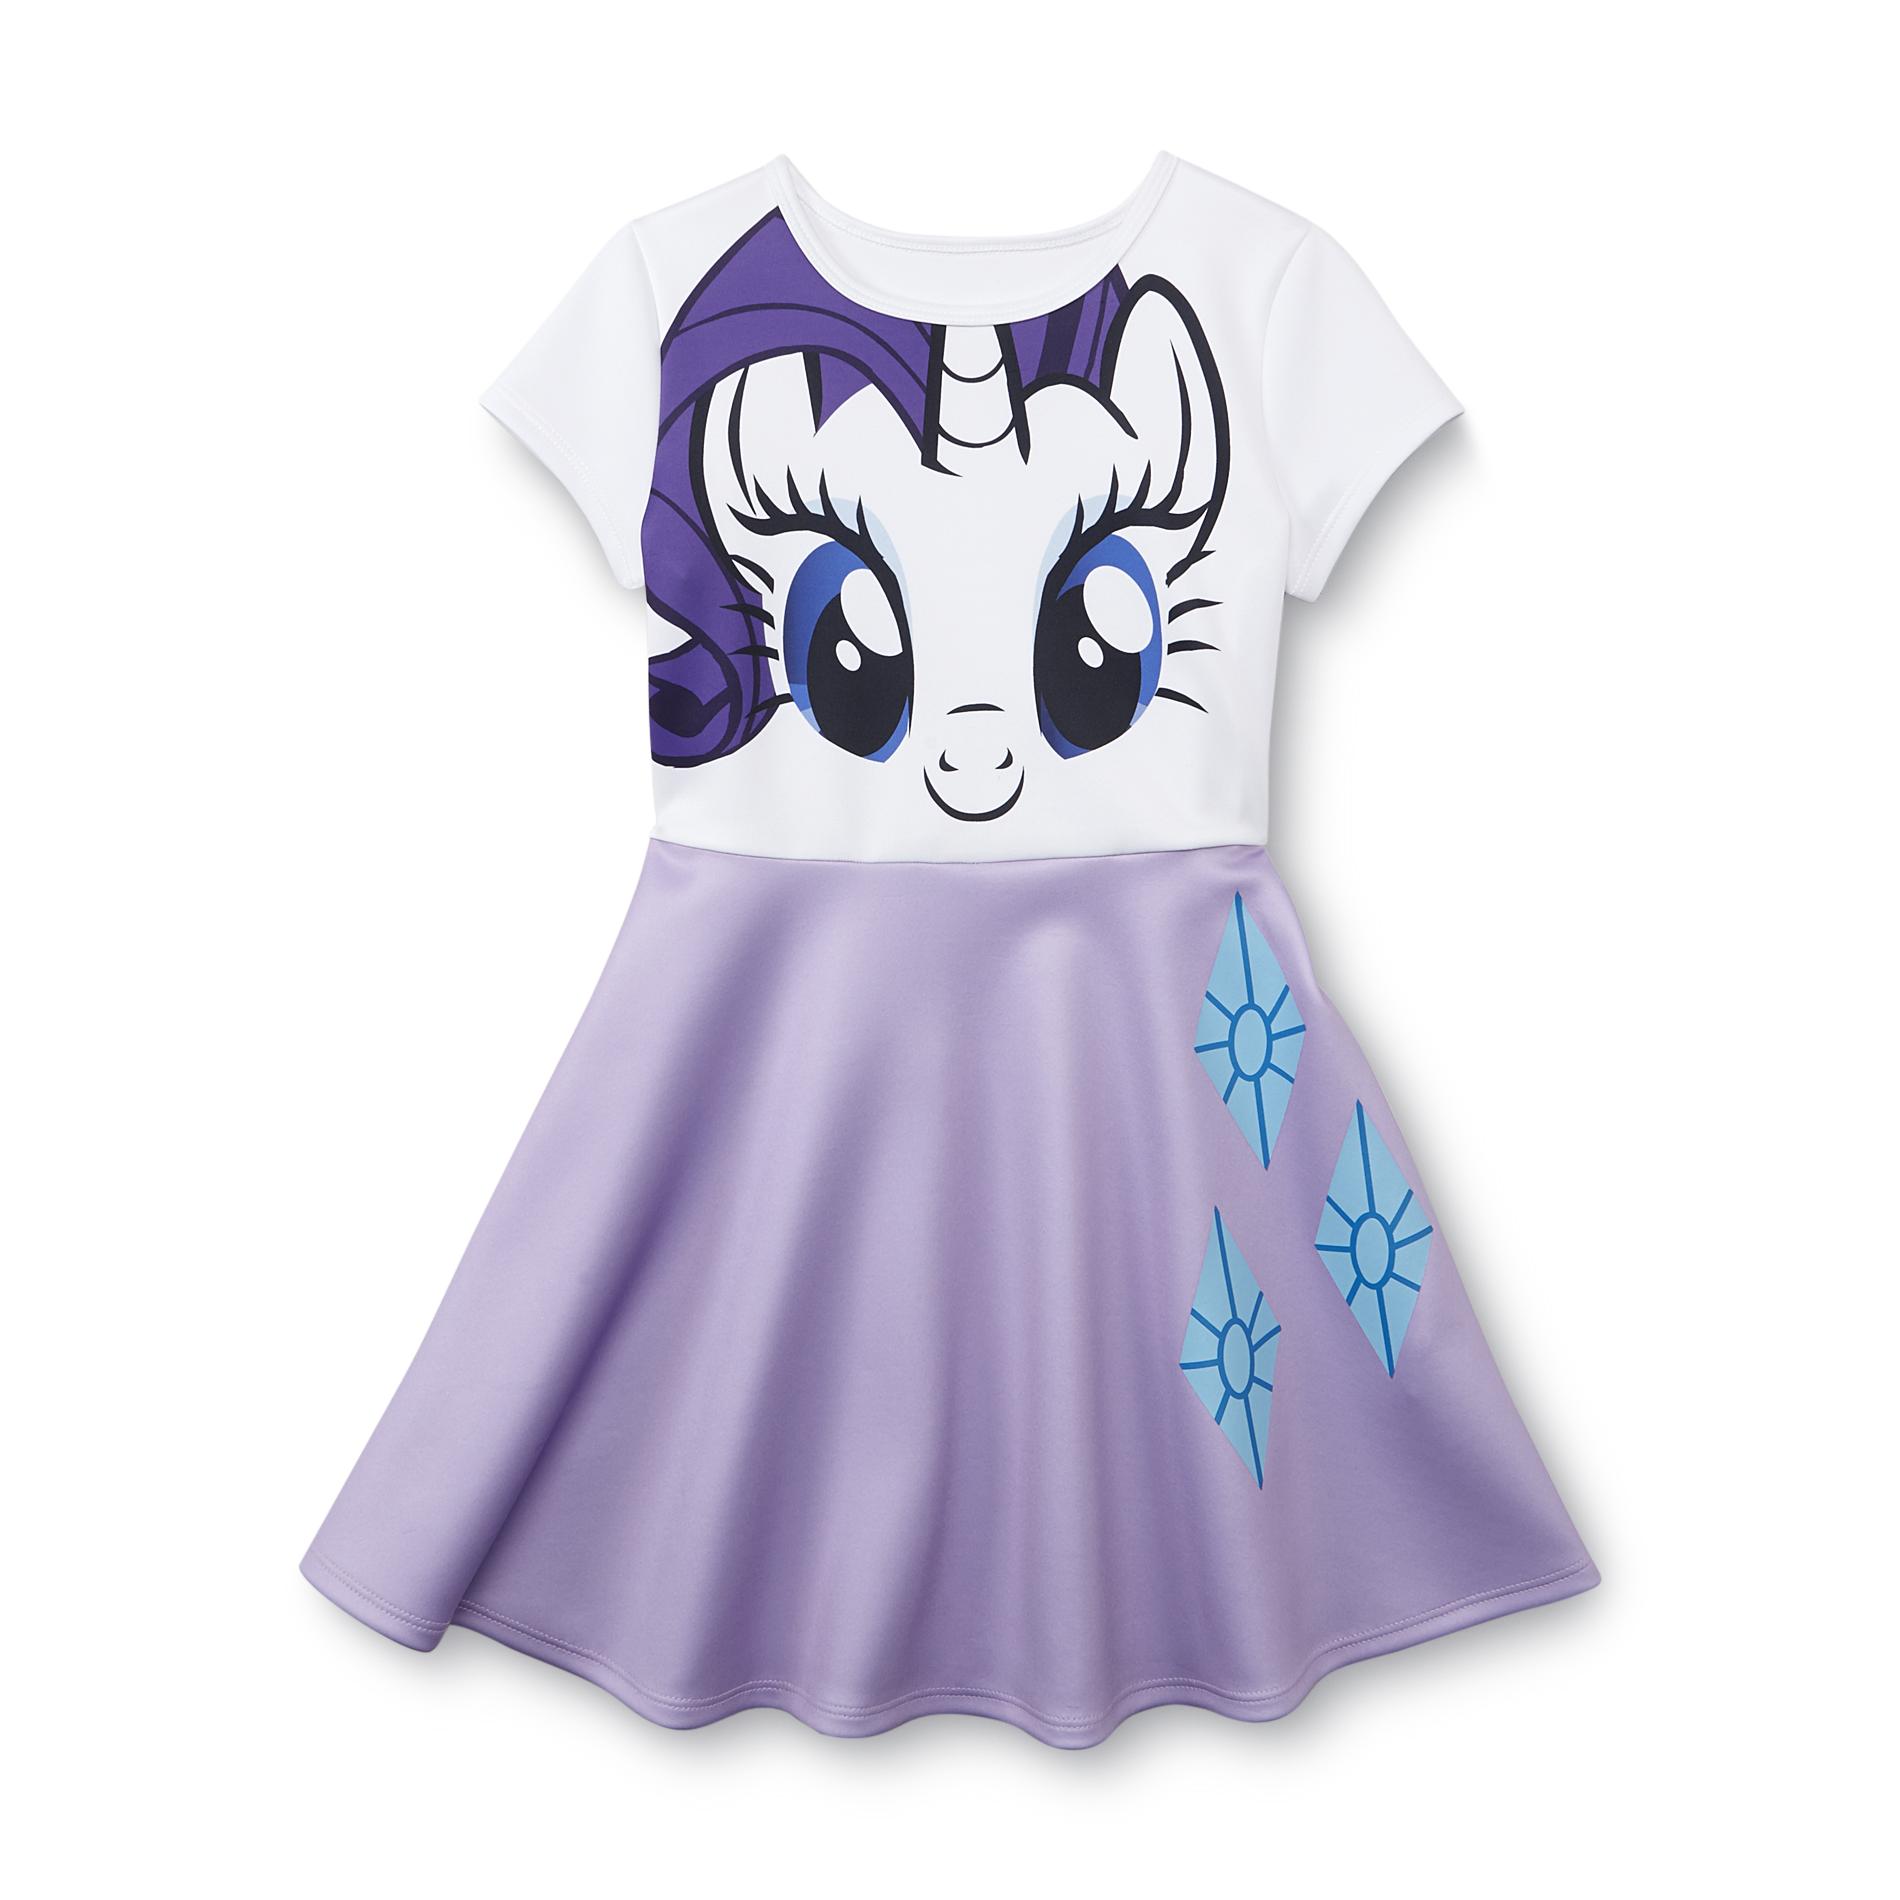 My Little Pony Girl's Dress - Rarity